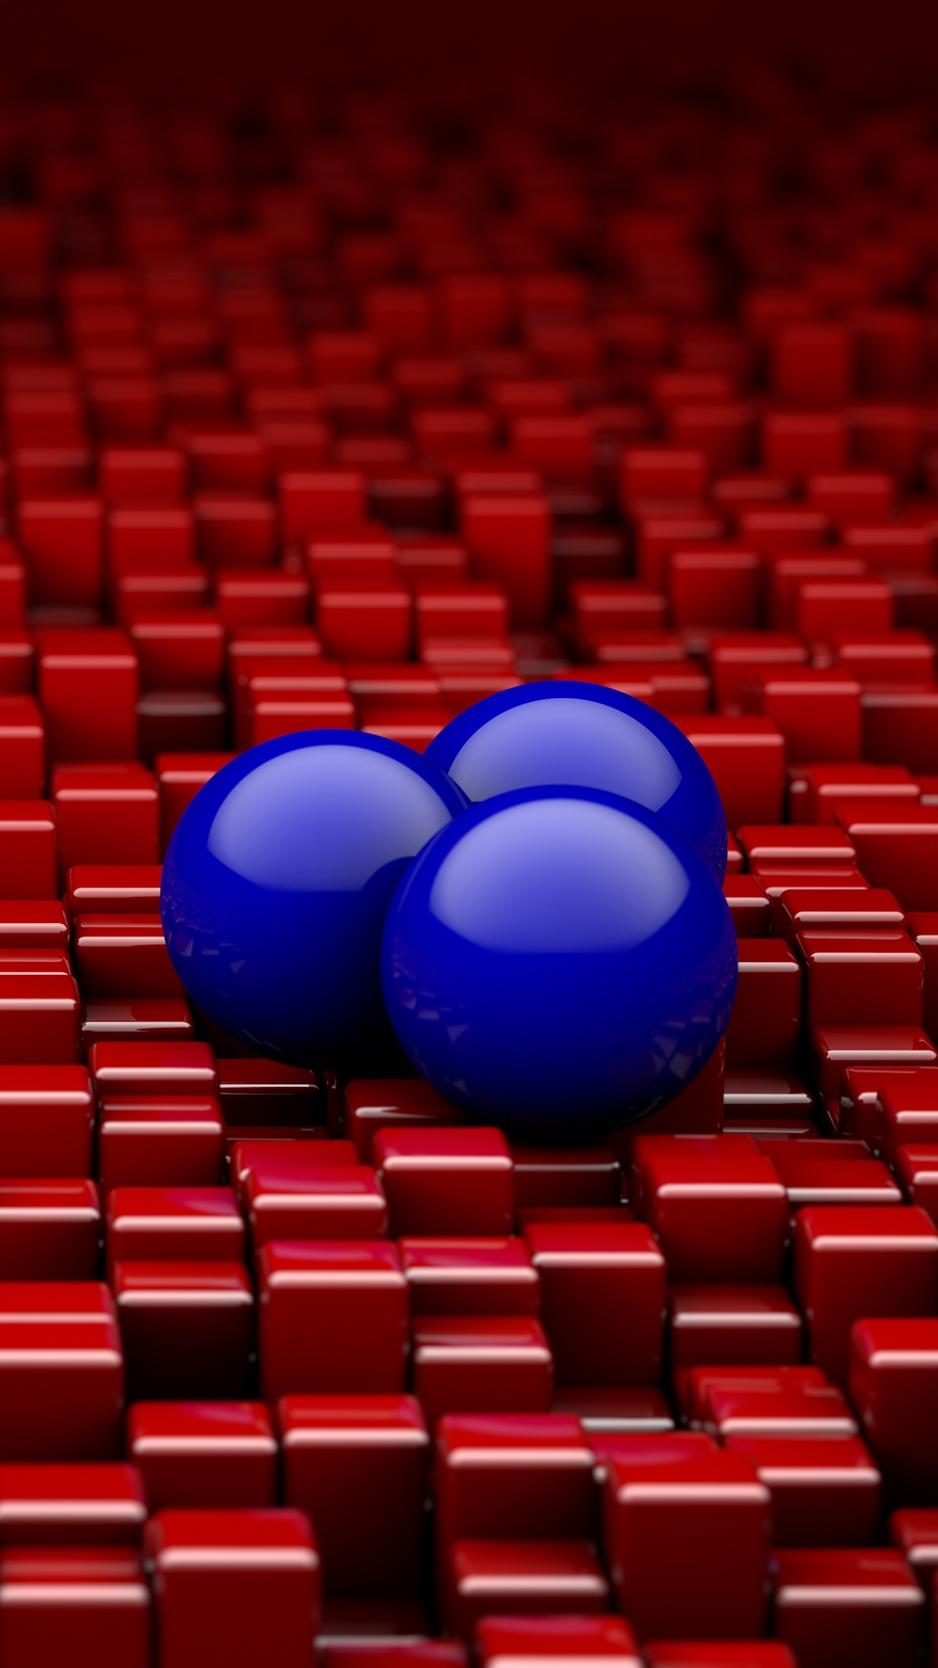 Download wallpaper 938x1668 balls, cubes, red, blue, rendering